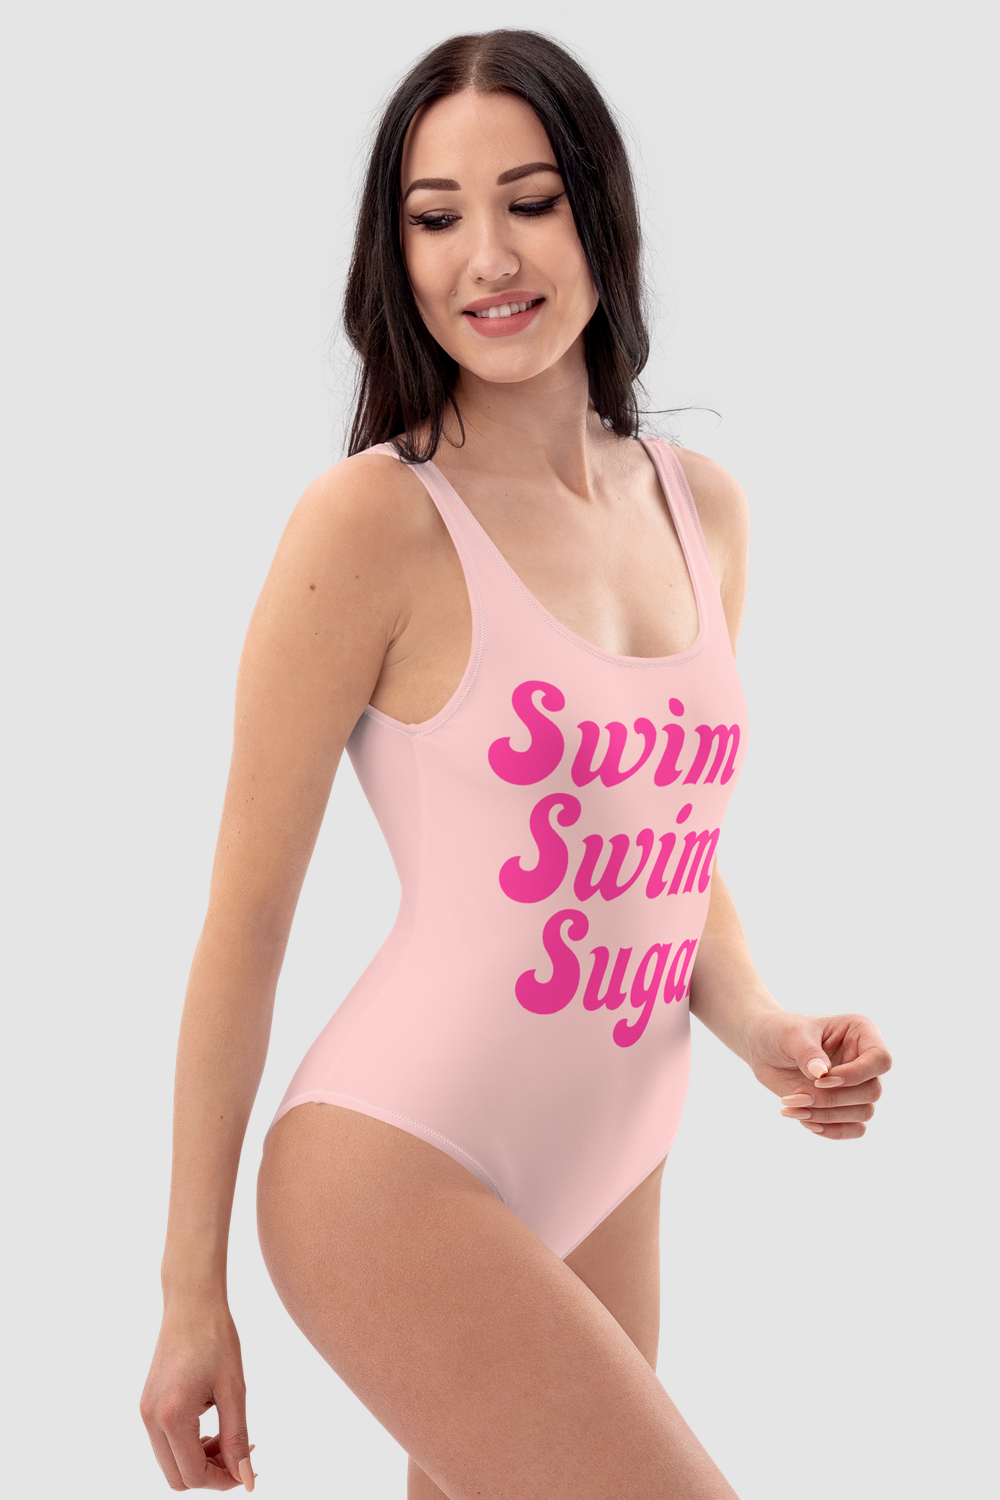 Swim Swim Sugar Cosmo Pink Women's One-Piece Swimsuit